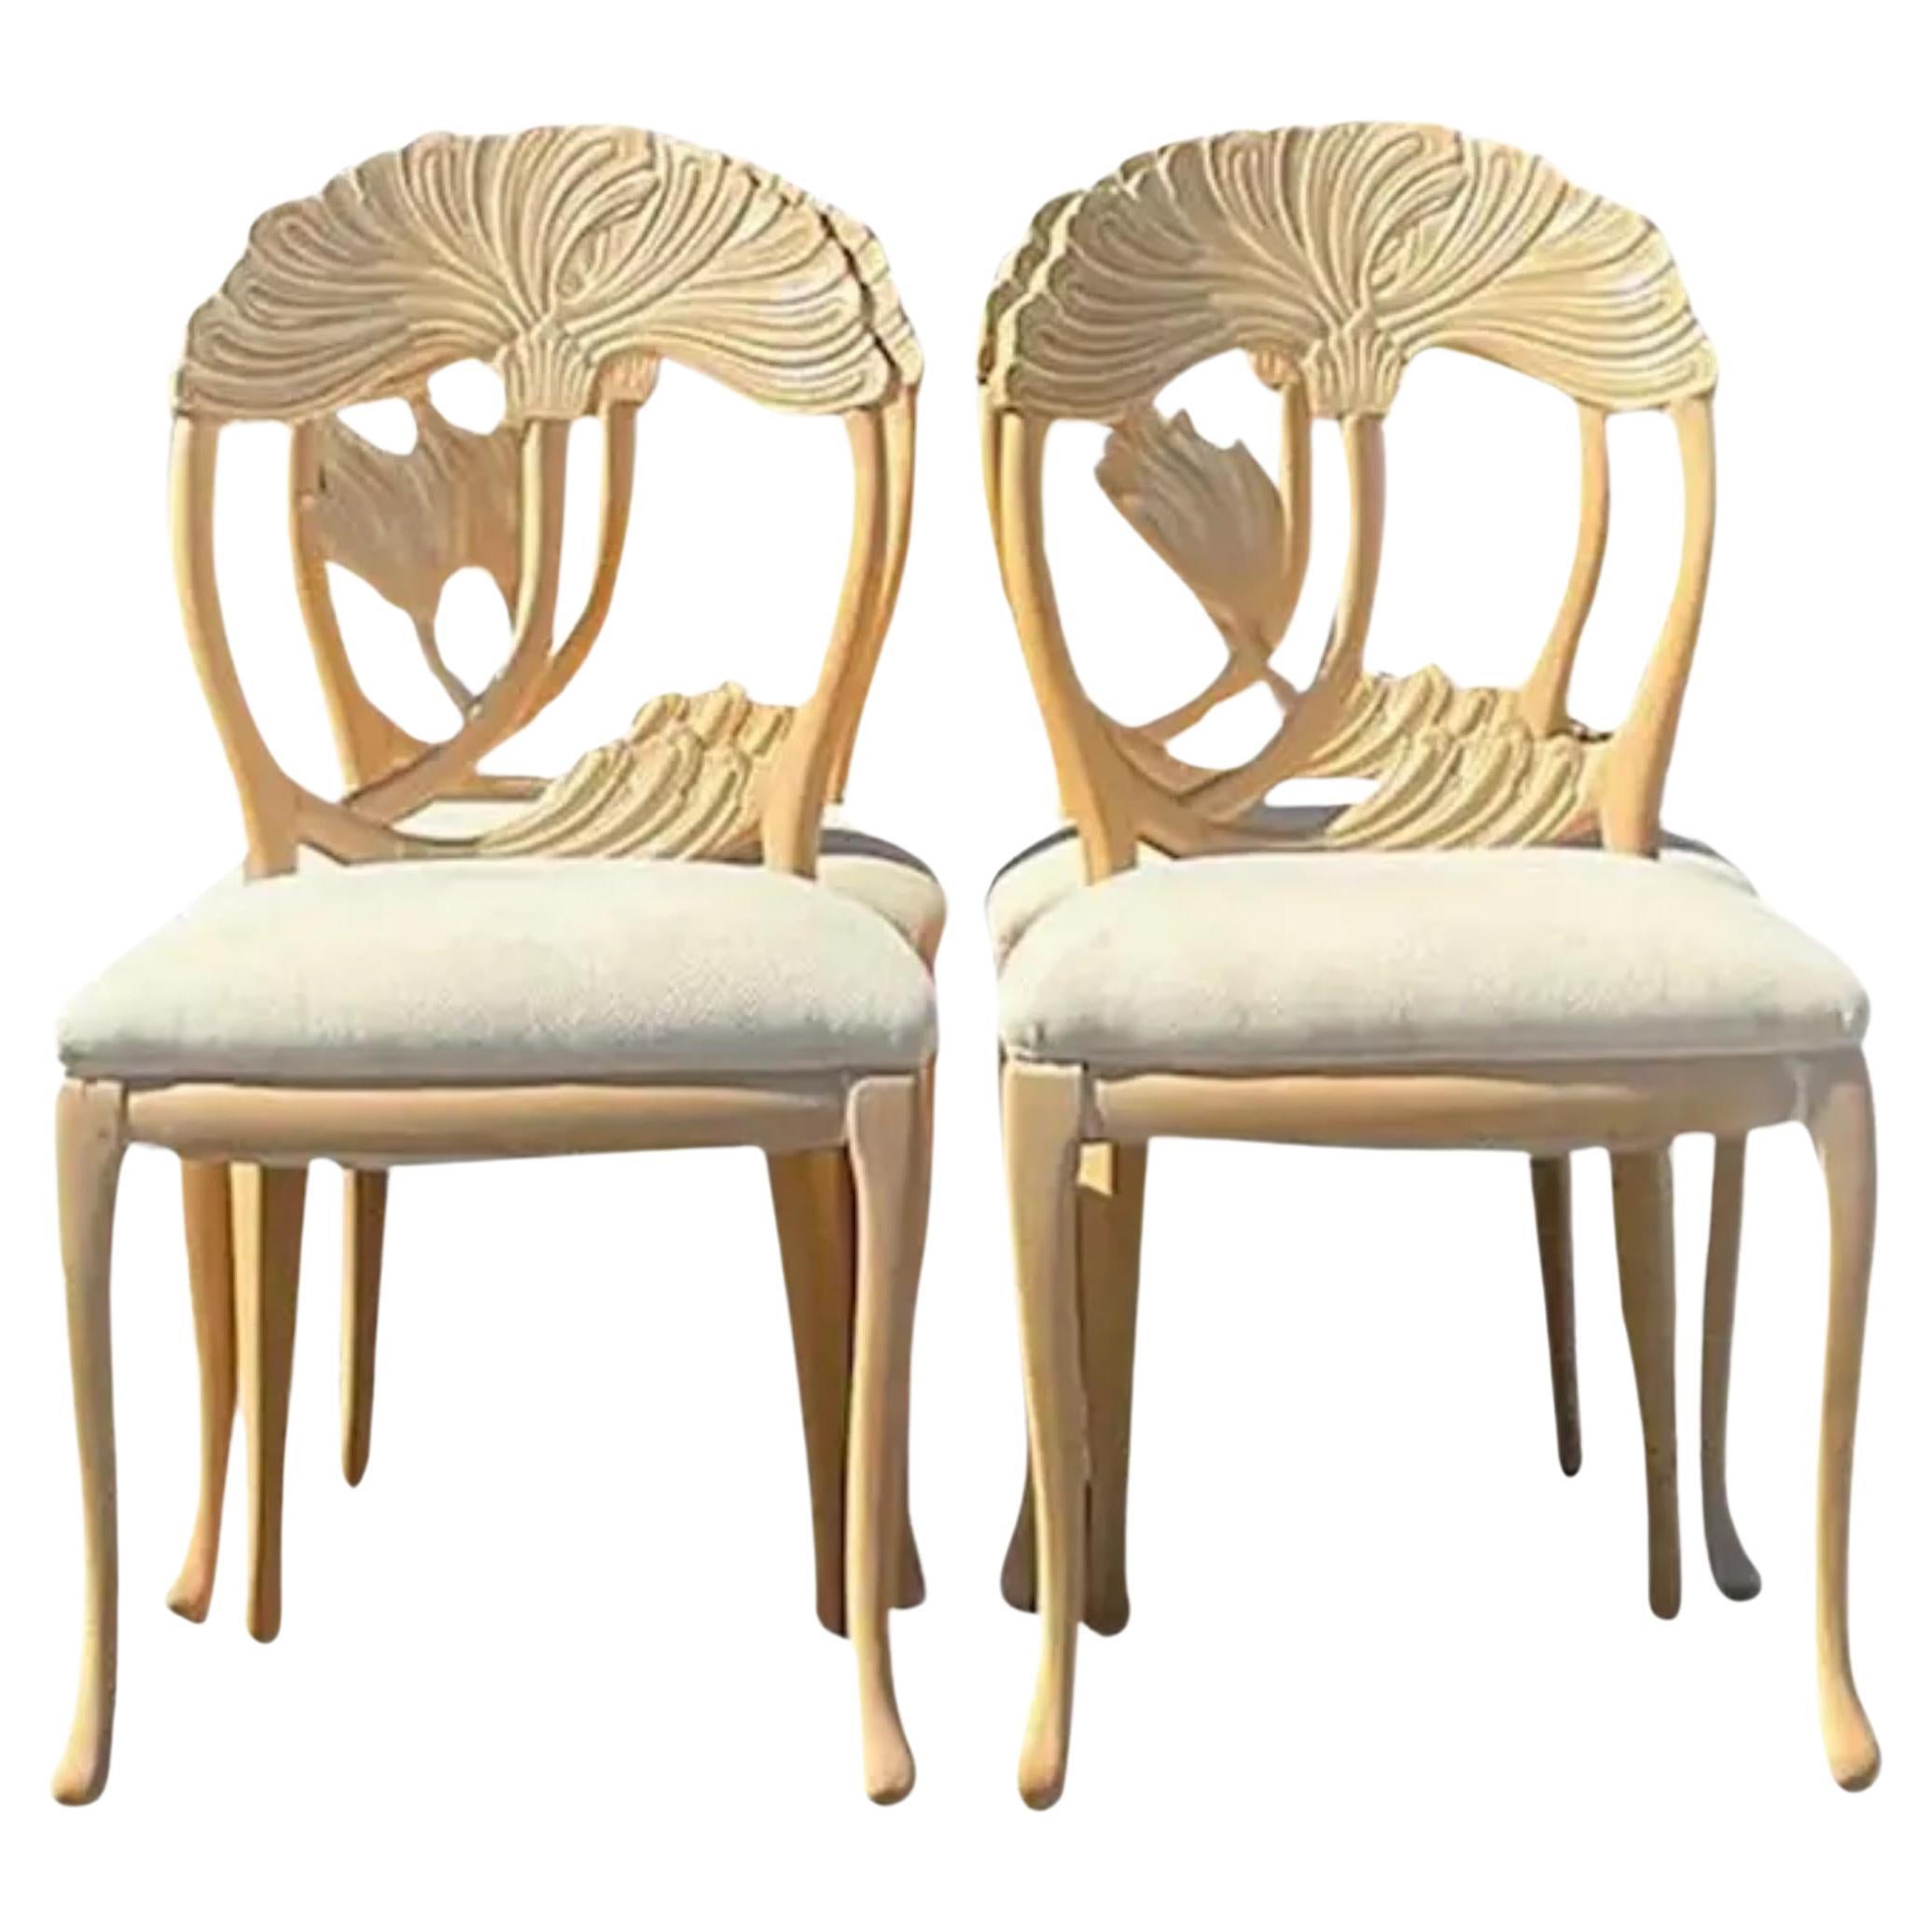 Vintage Coastal Carved Lotus Blossom Chairs - Set of 4